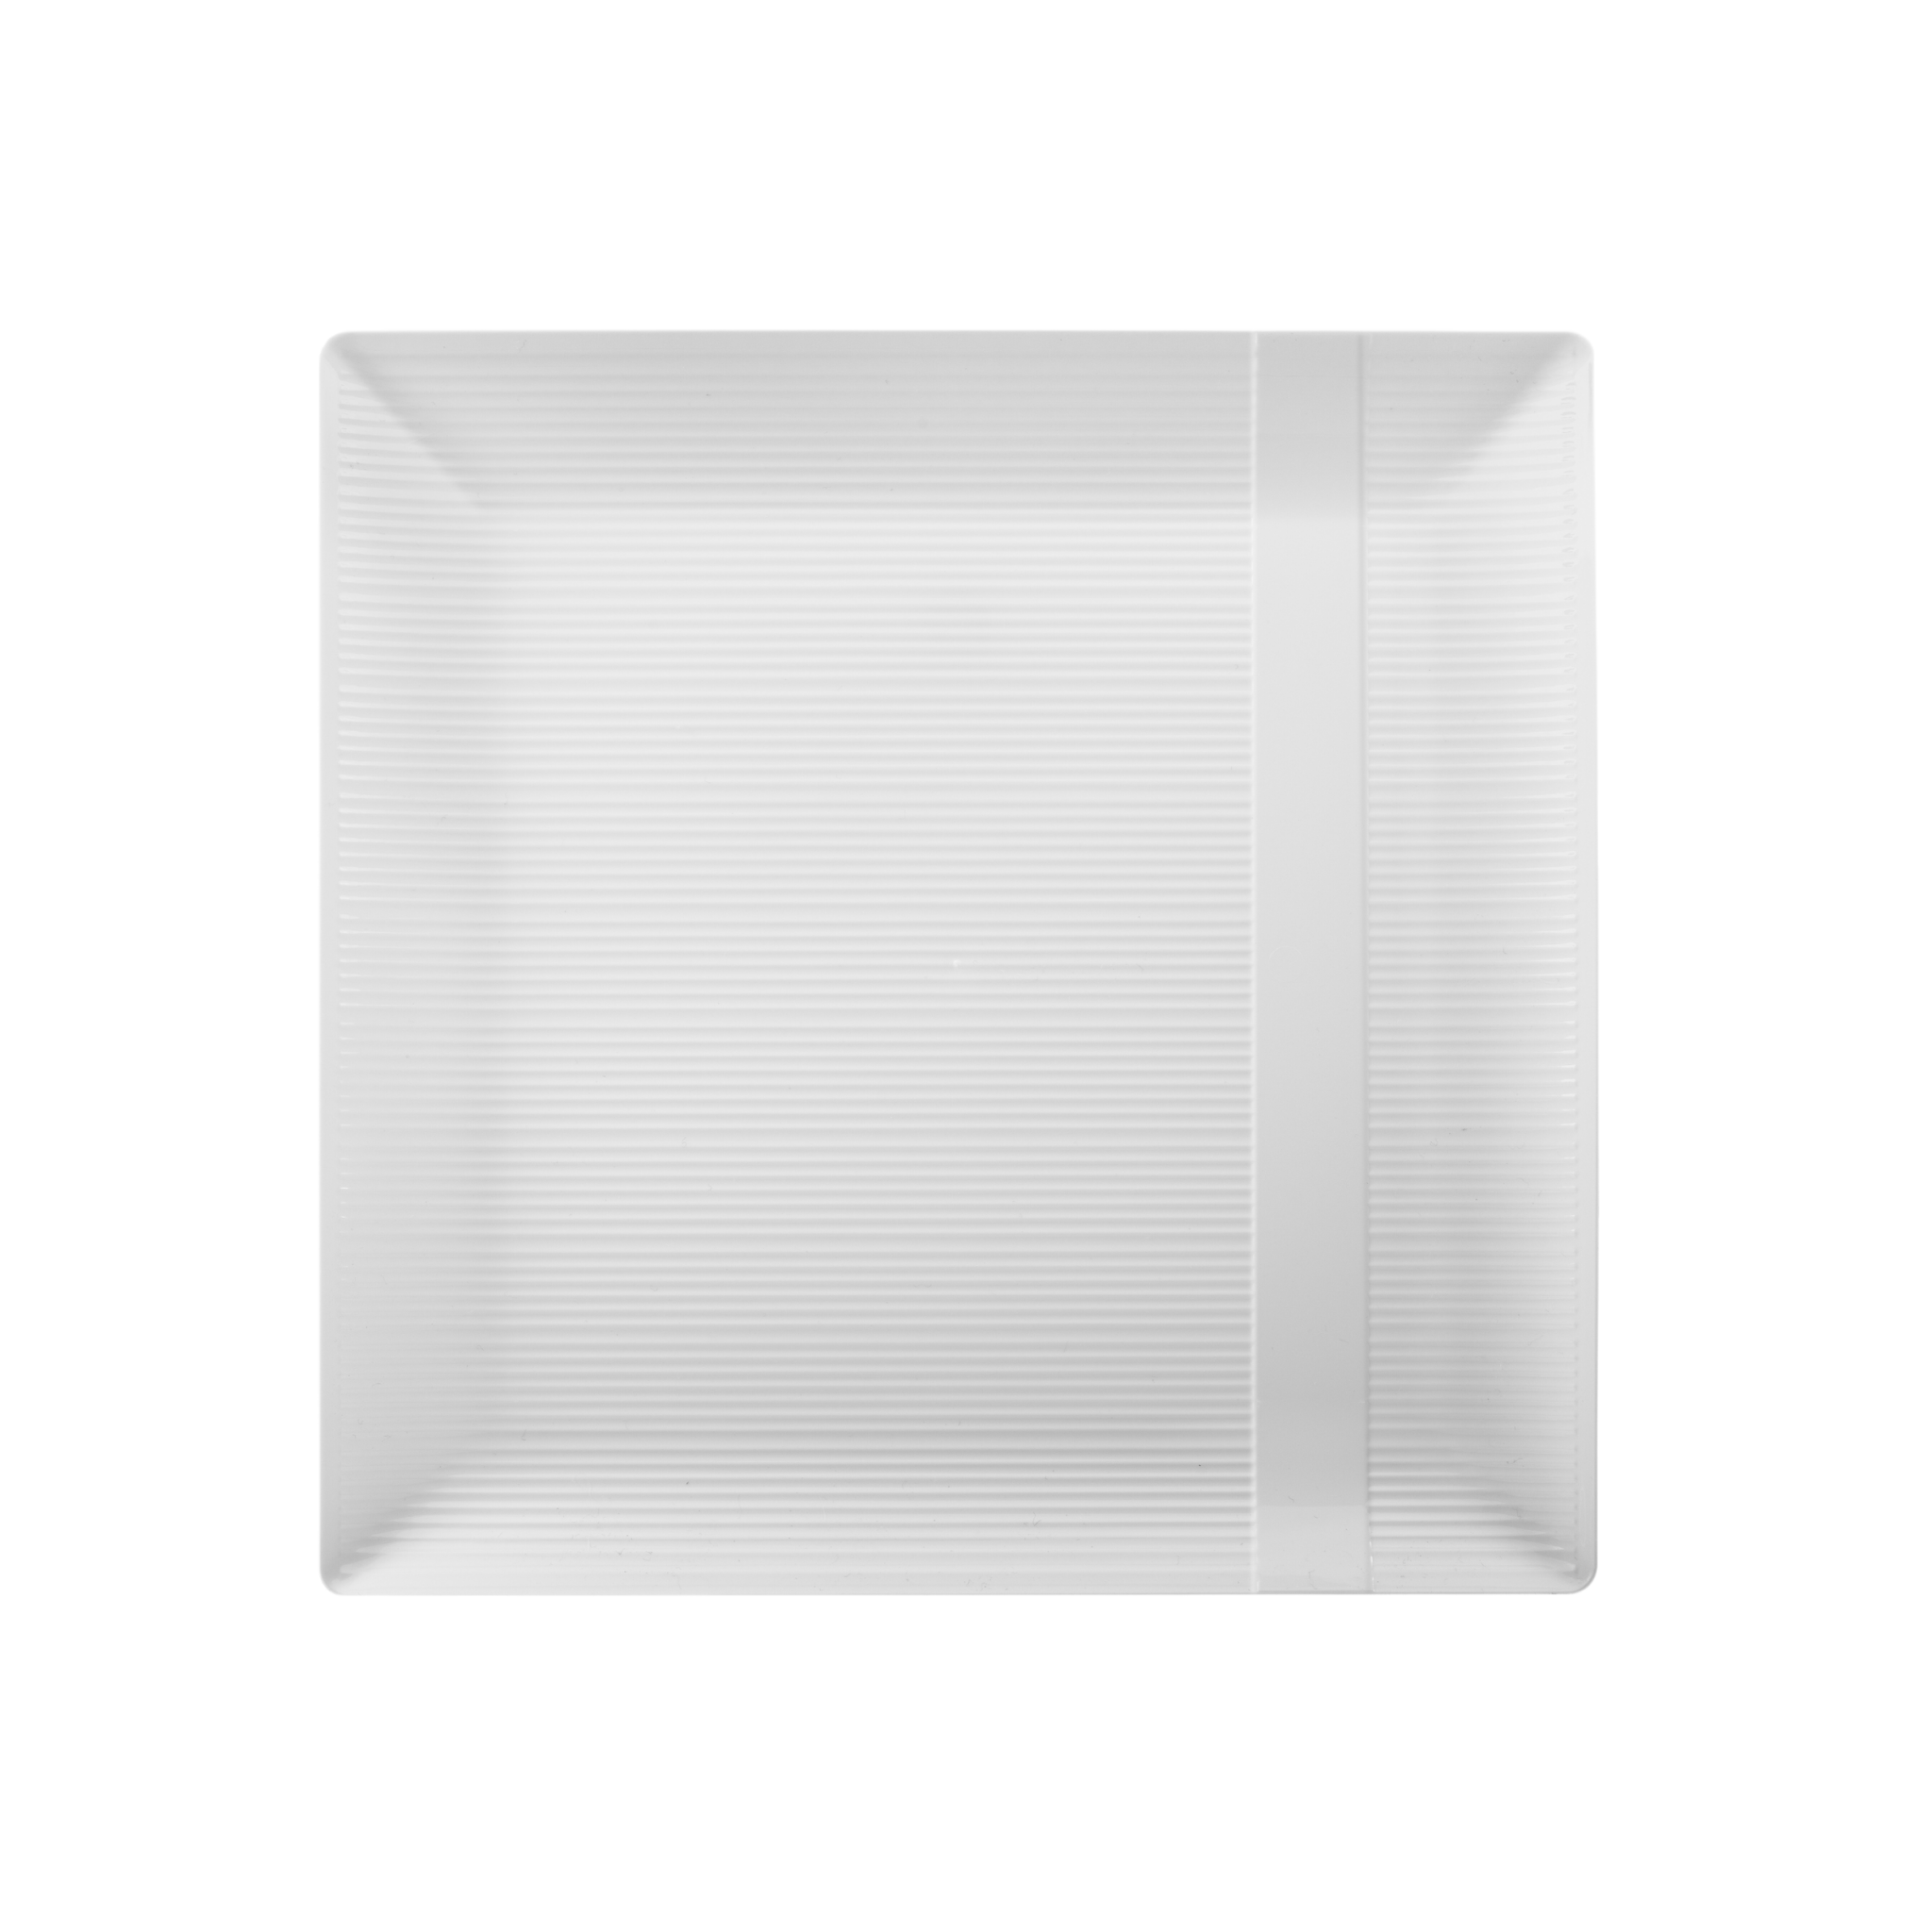 9" Zen Ridged White Square Plastic Plates (120 Count)